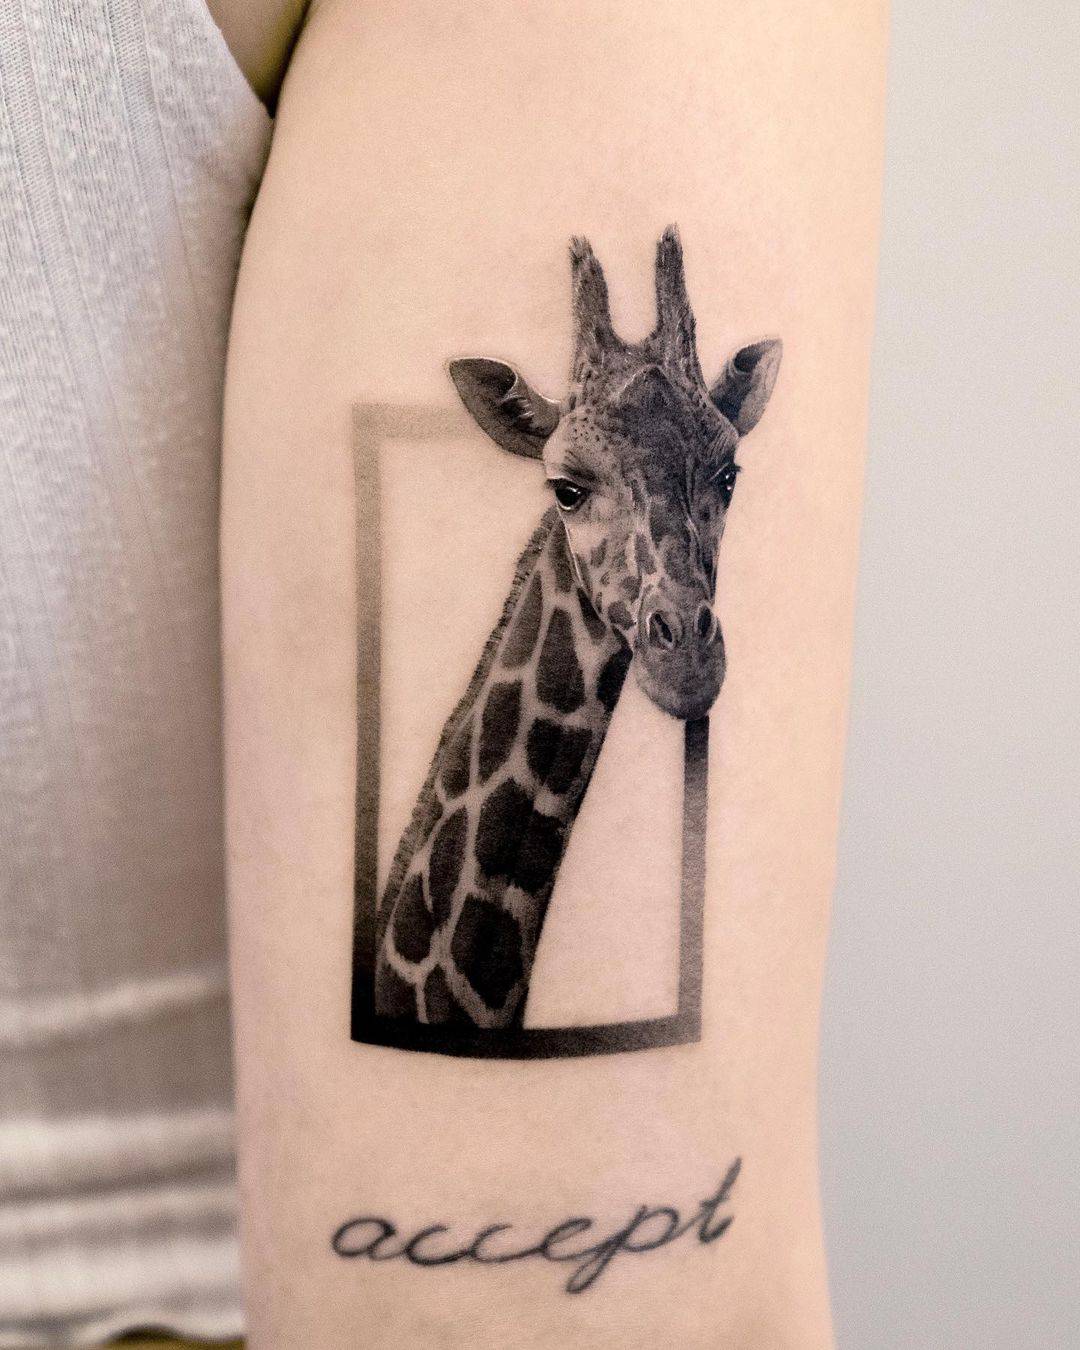 Giraffe tattoo by start.your .line